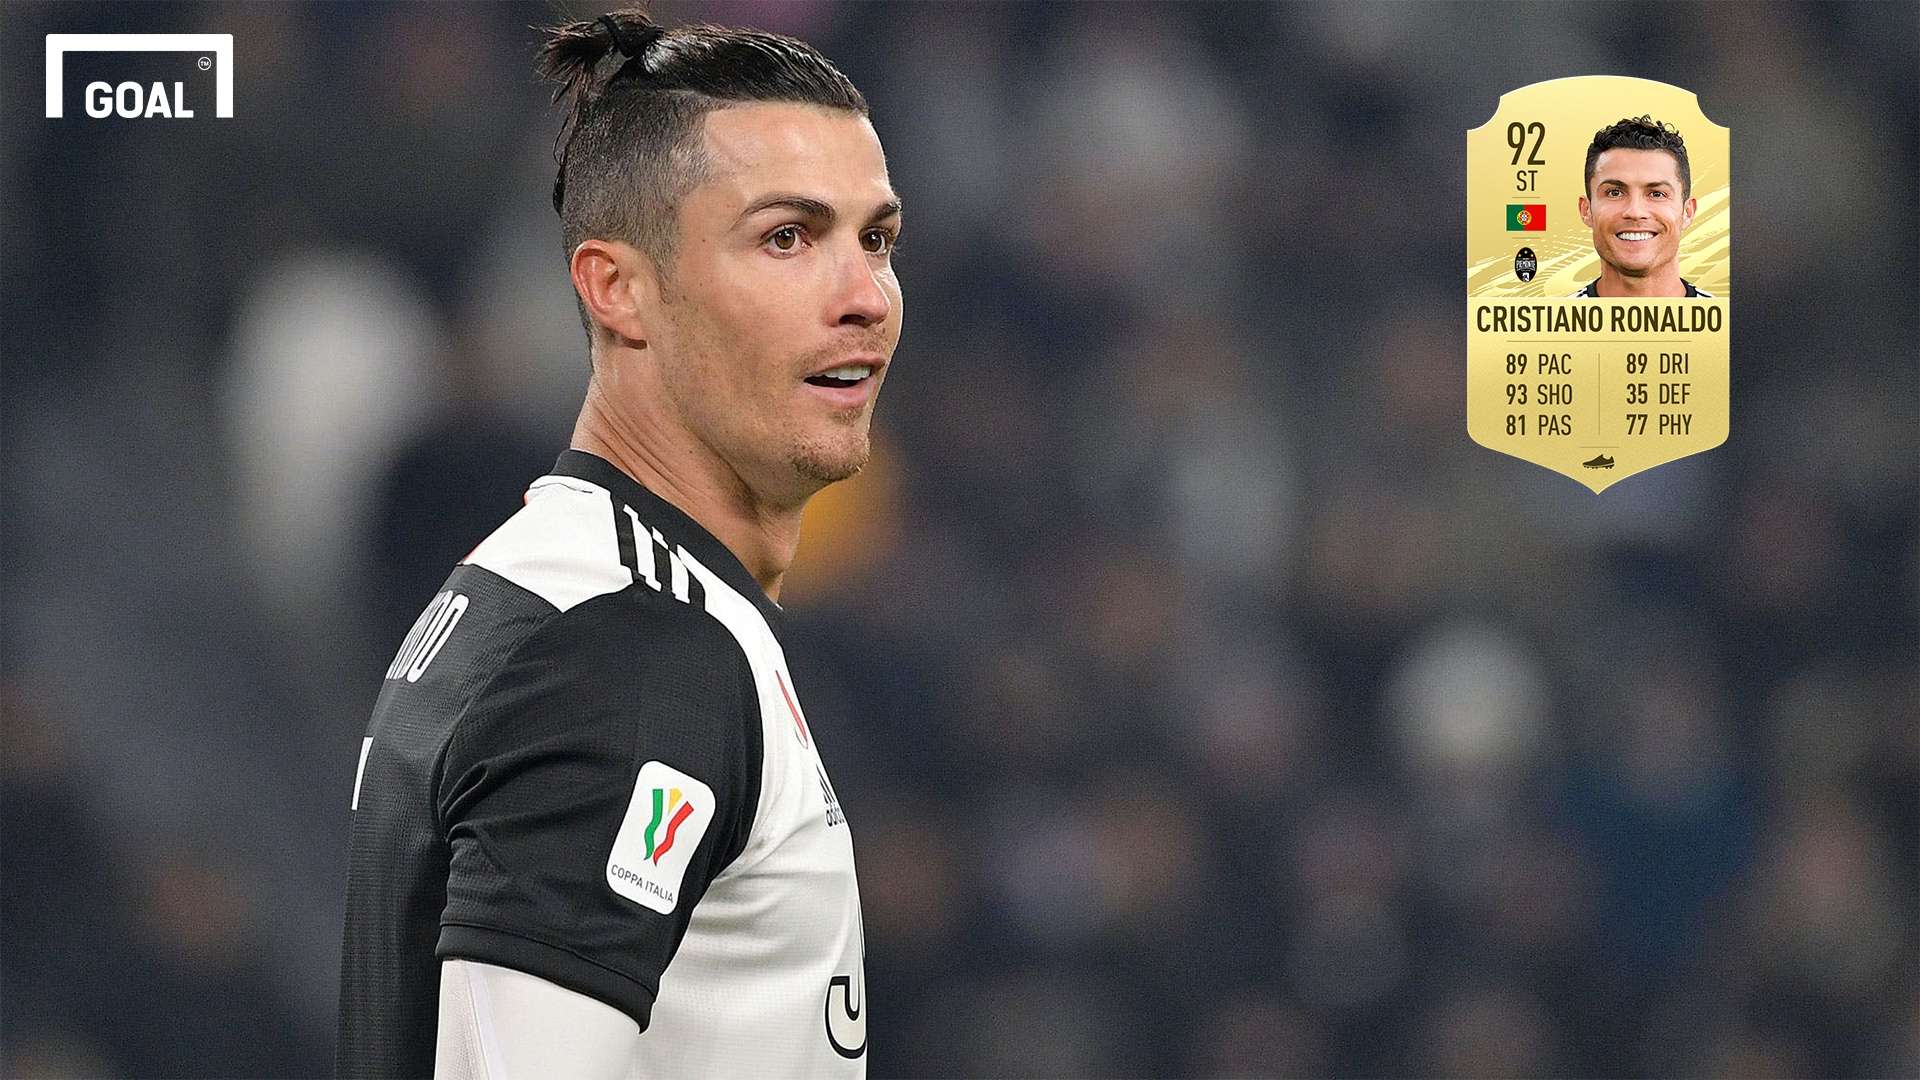 Cristiano Ronaldo FIFA 21 stats